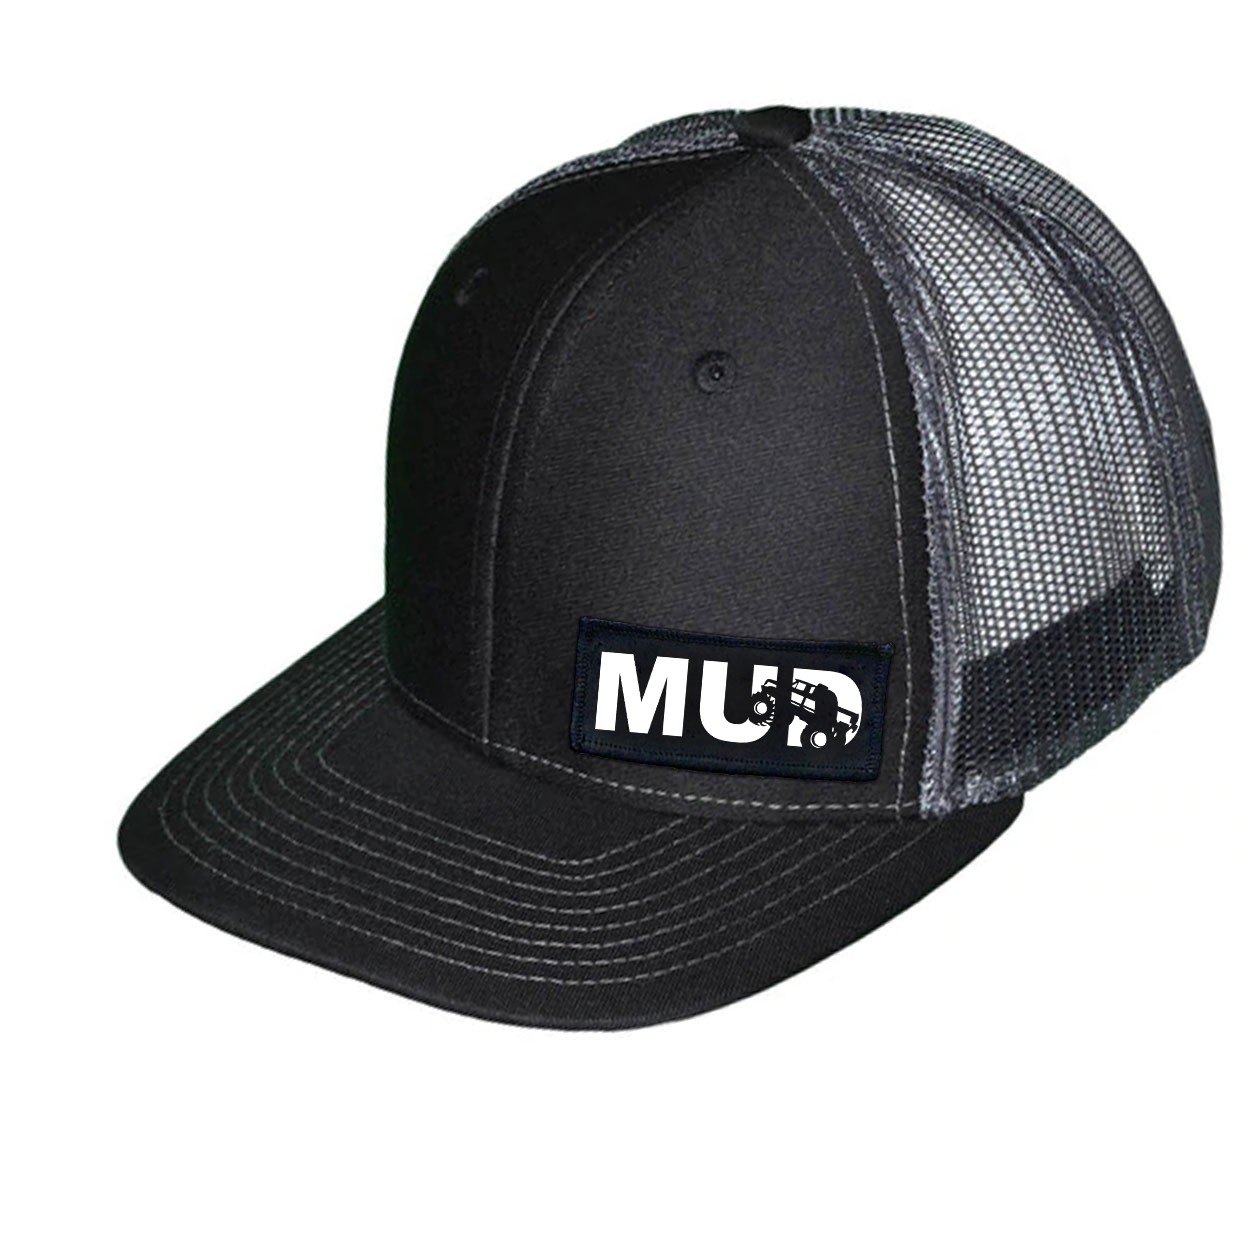 Mud Truck Logo Night Out Woven Patch Snapback Trucker Hat Black/Gray (White Logo)